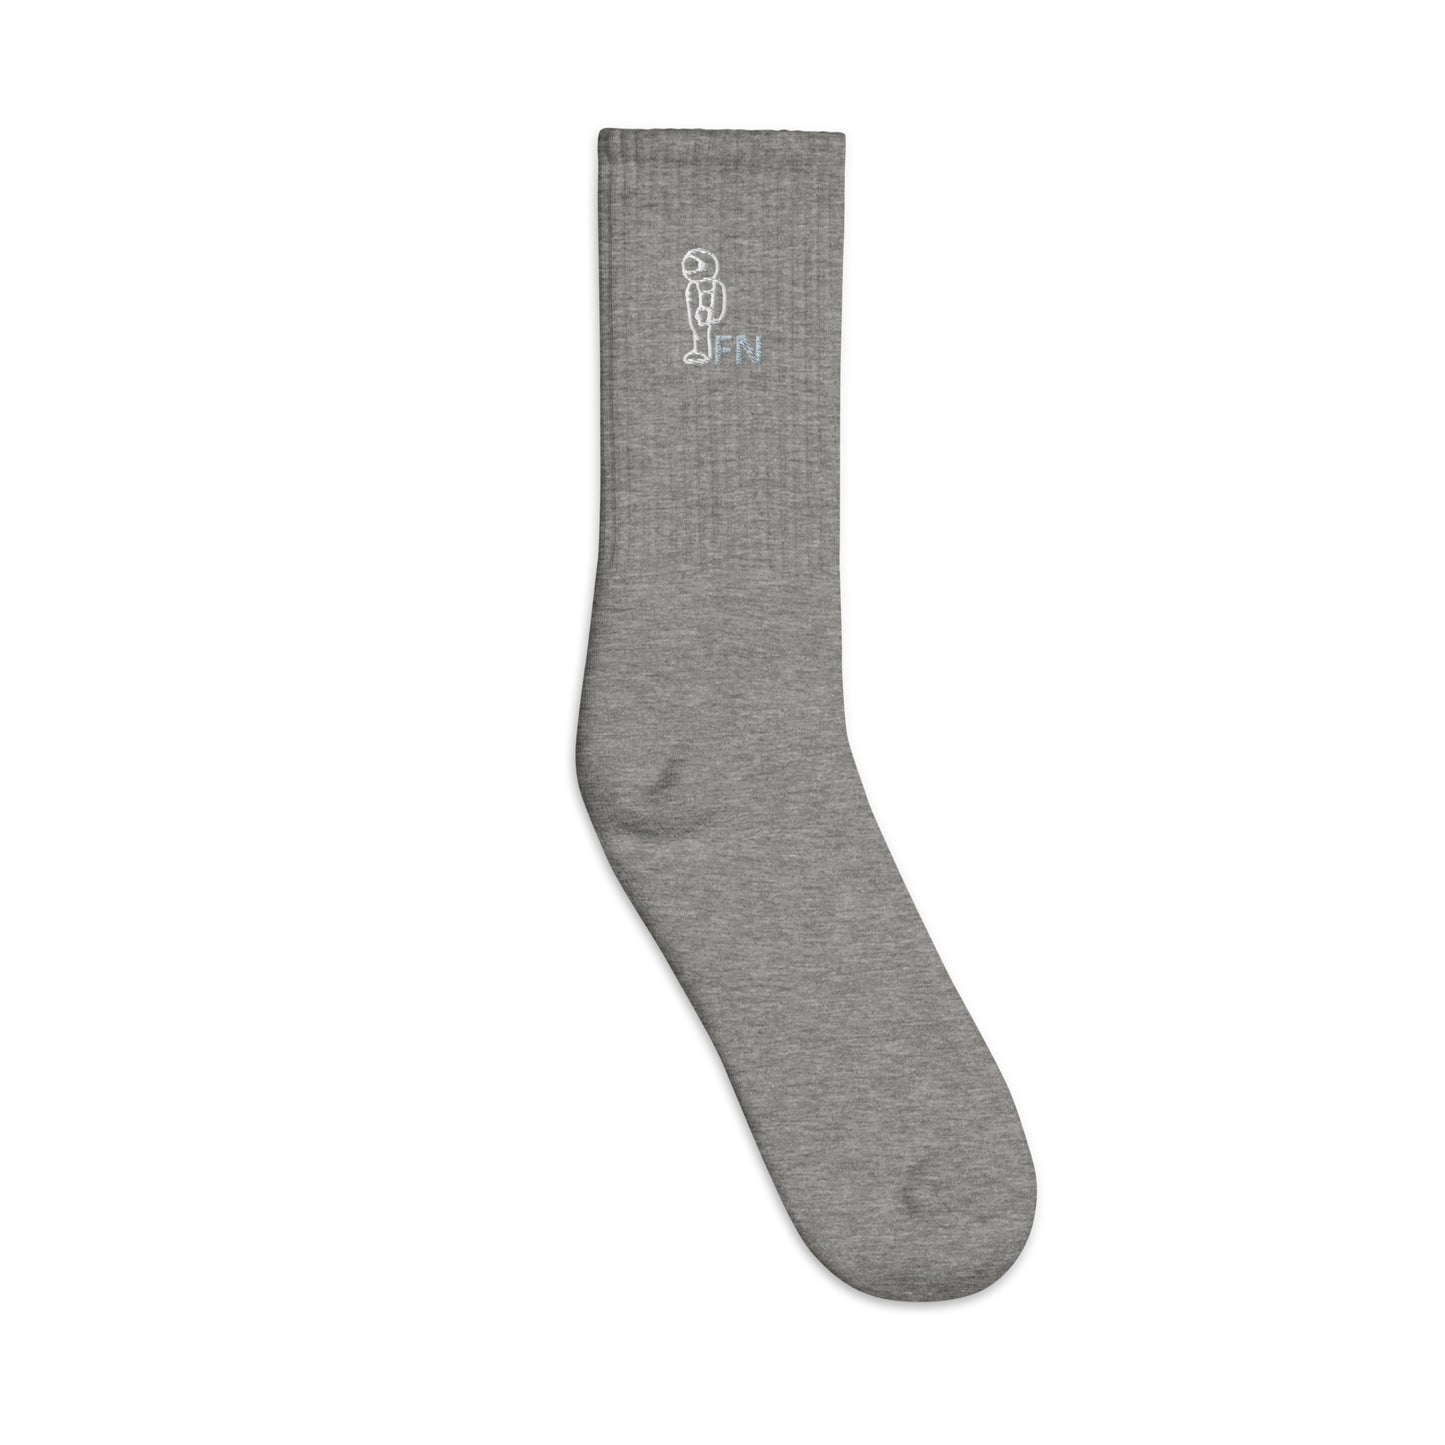 FN UNDERWEAR UNISEX: Unamerican Astro Embroidered Socks (grey)